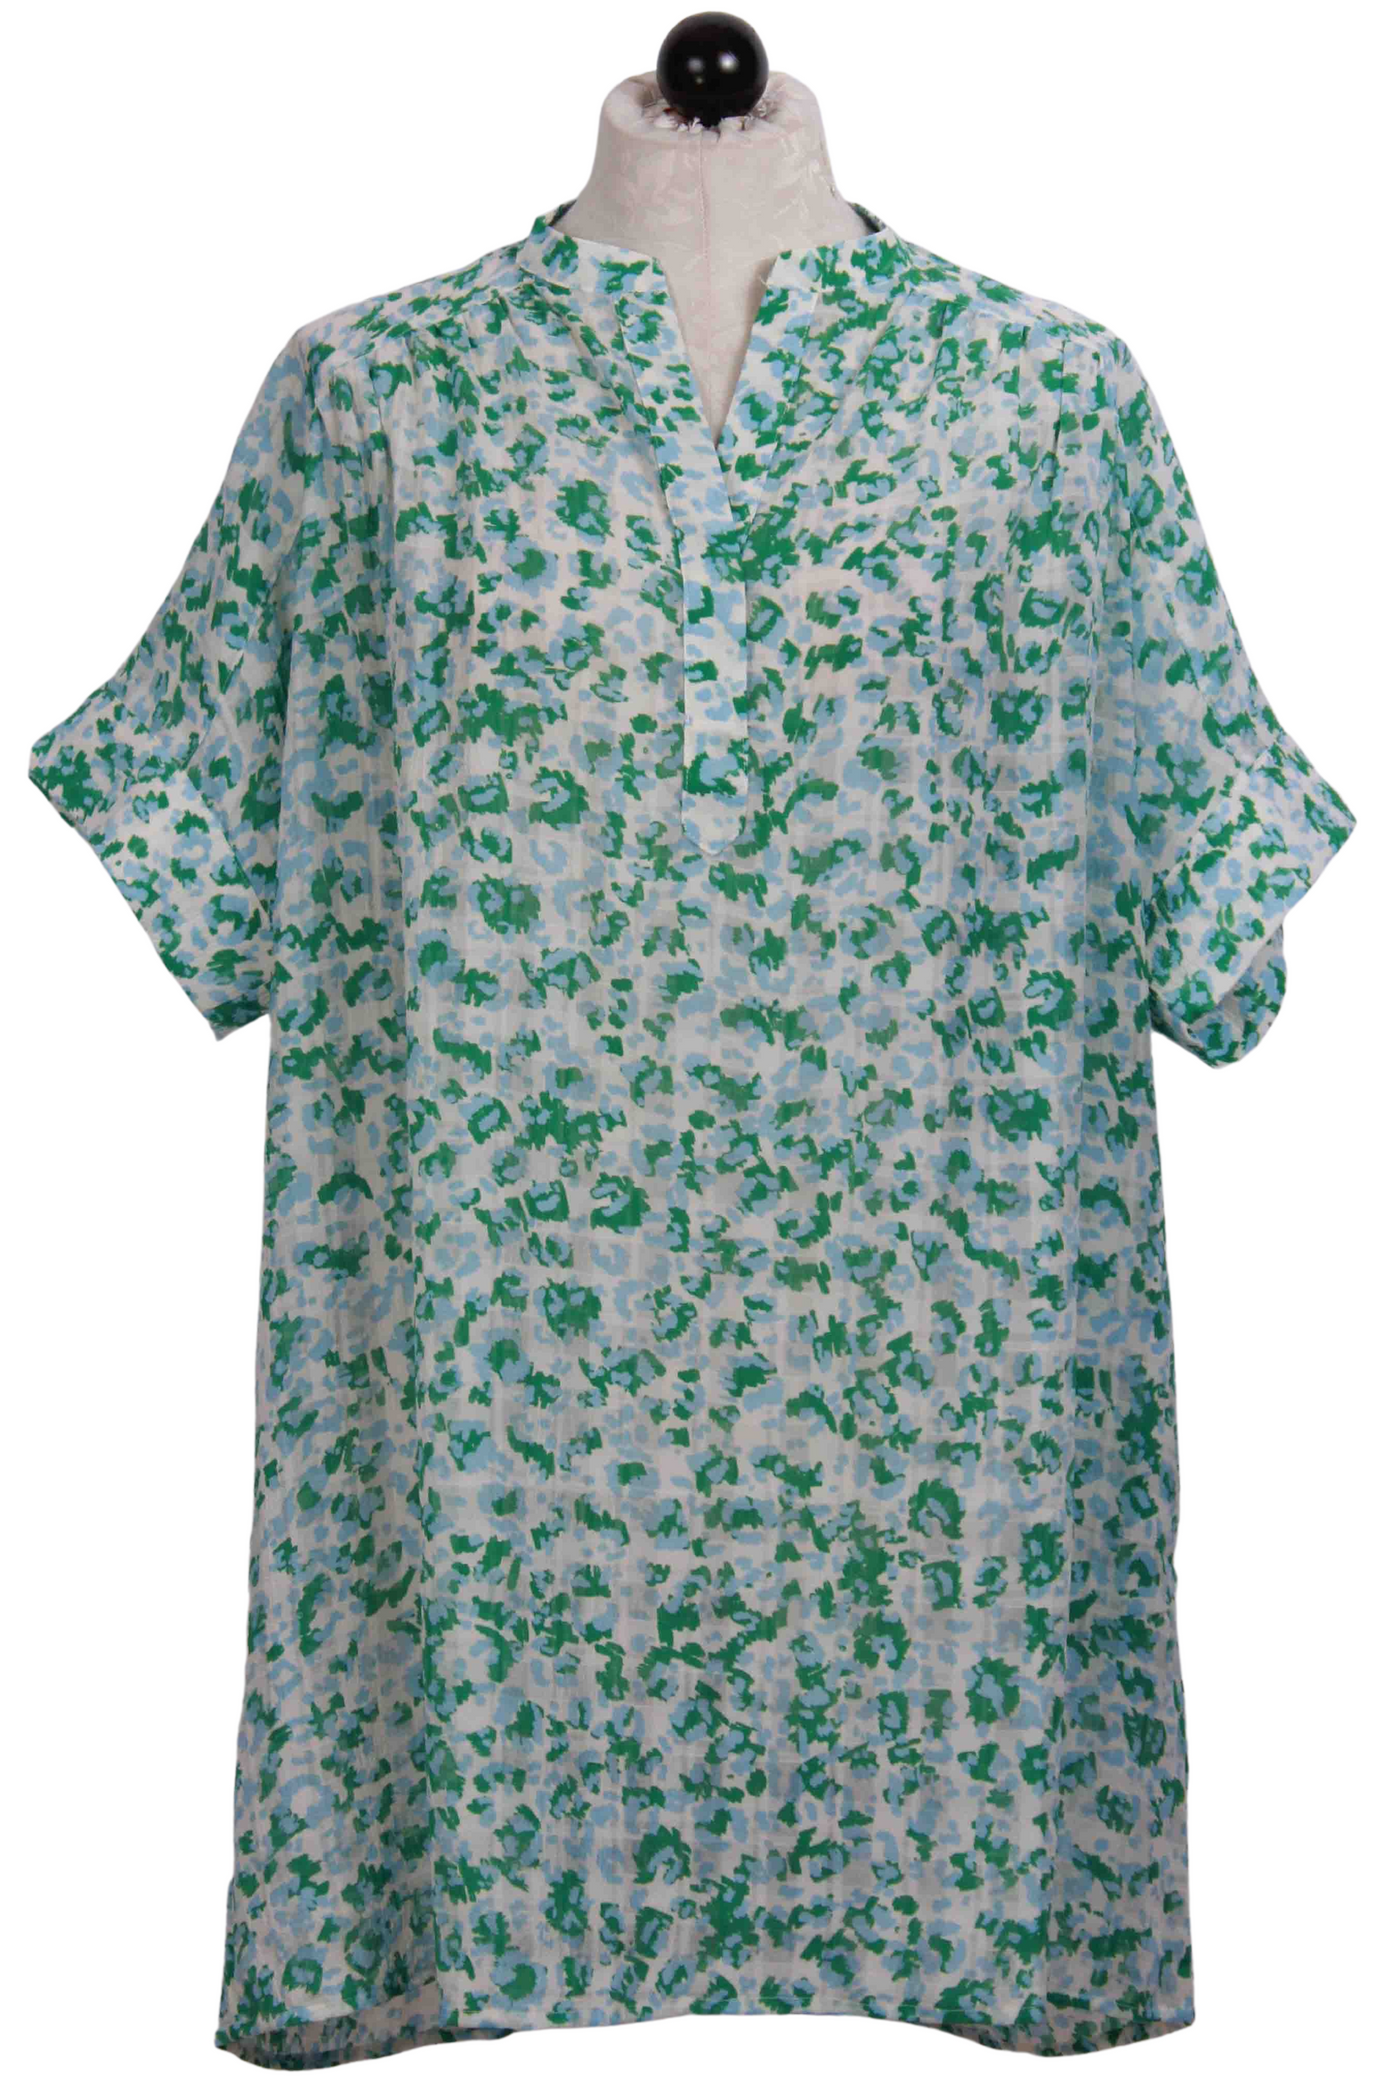 Blue/Green Short Sleeve Printed Shirt Dress by The Korner